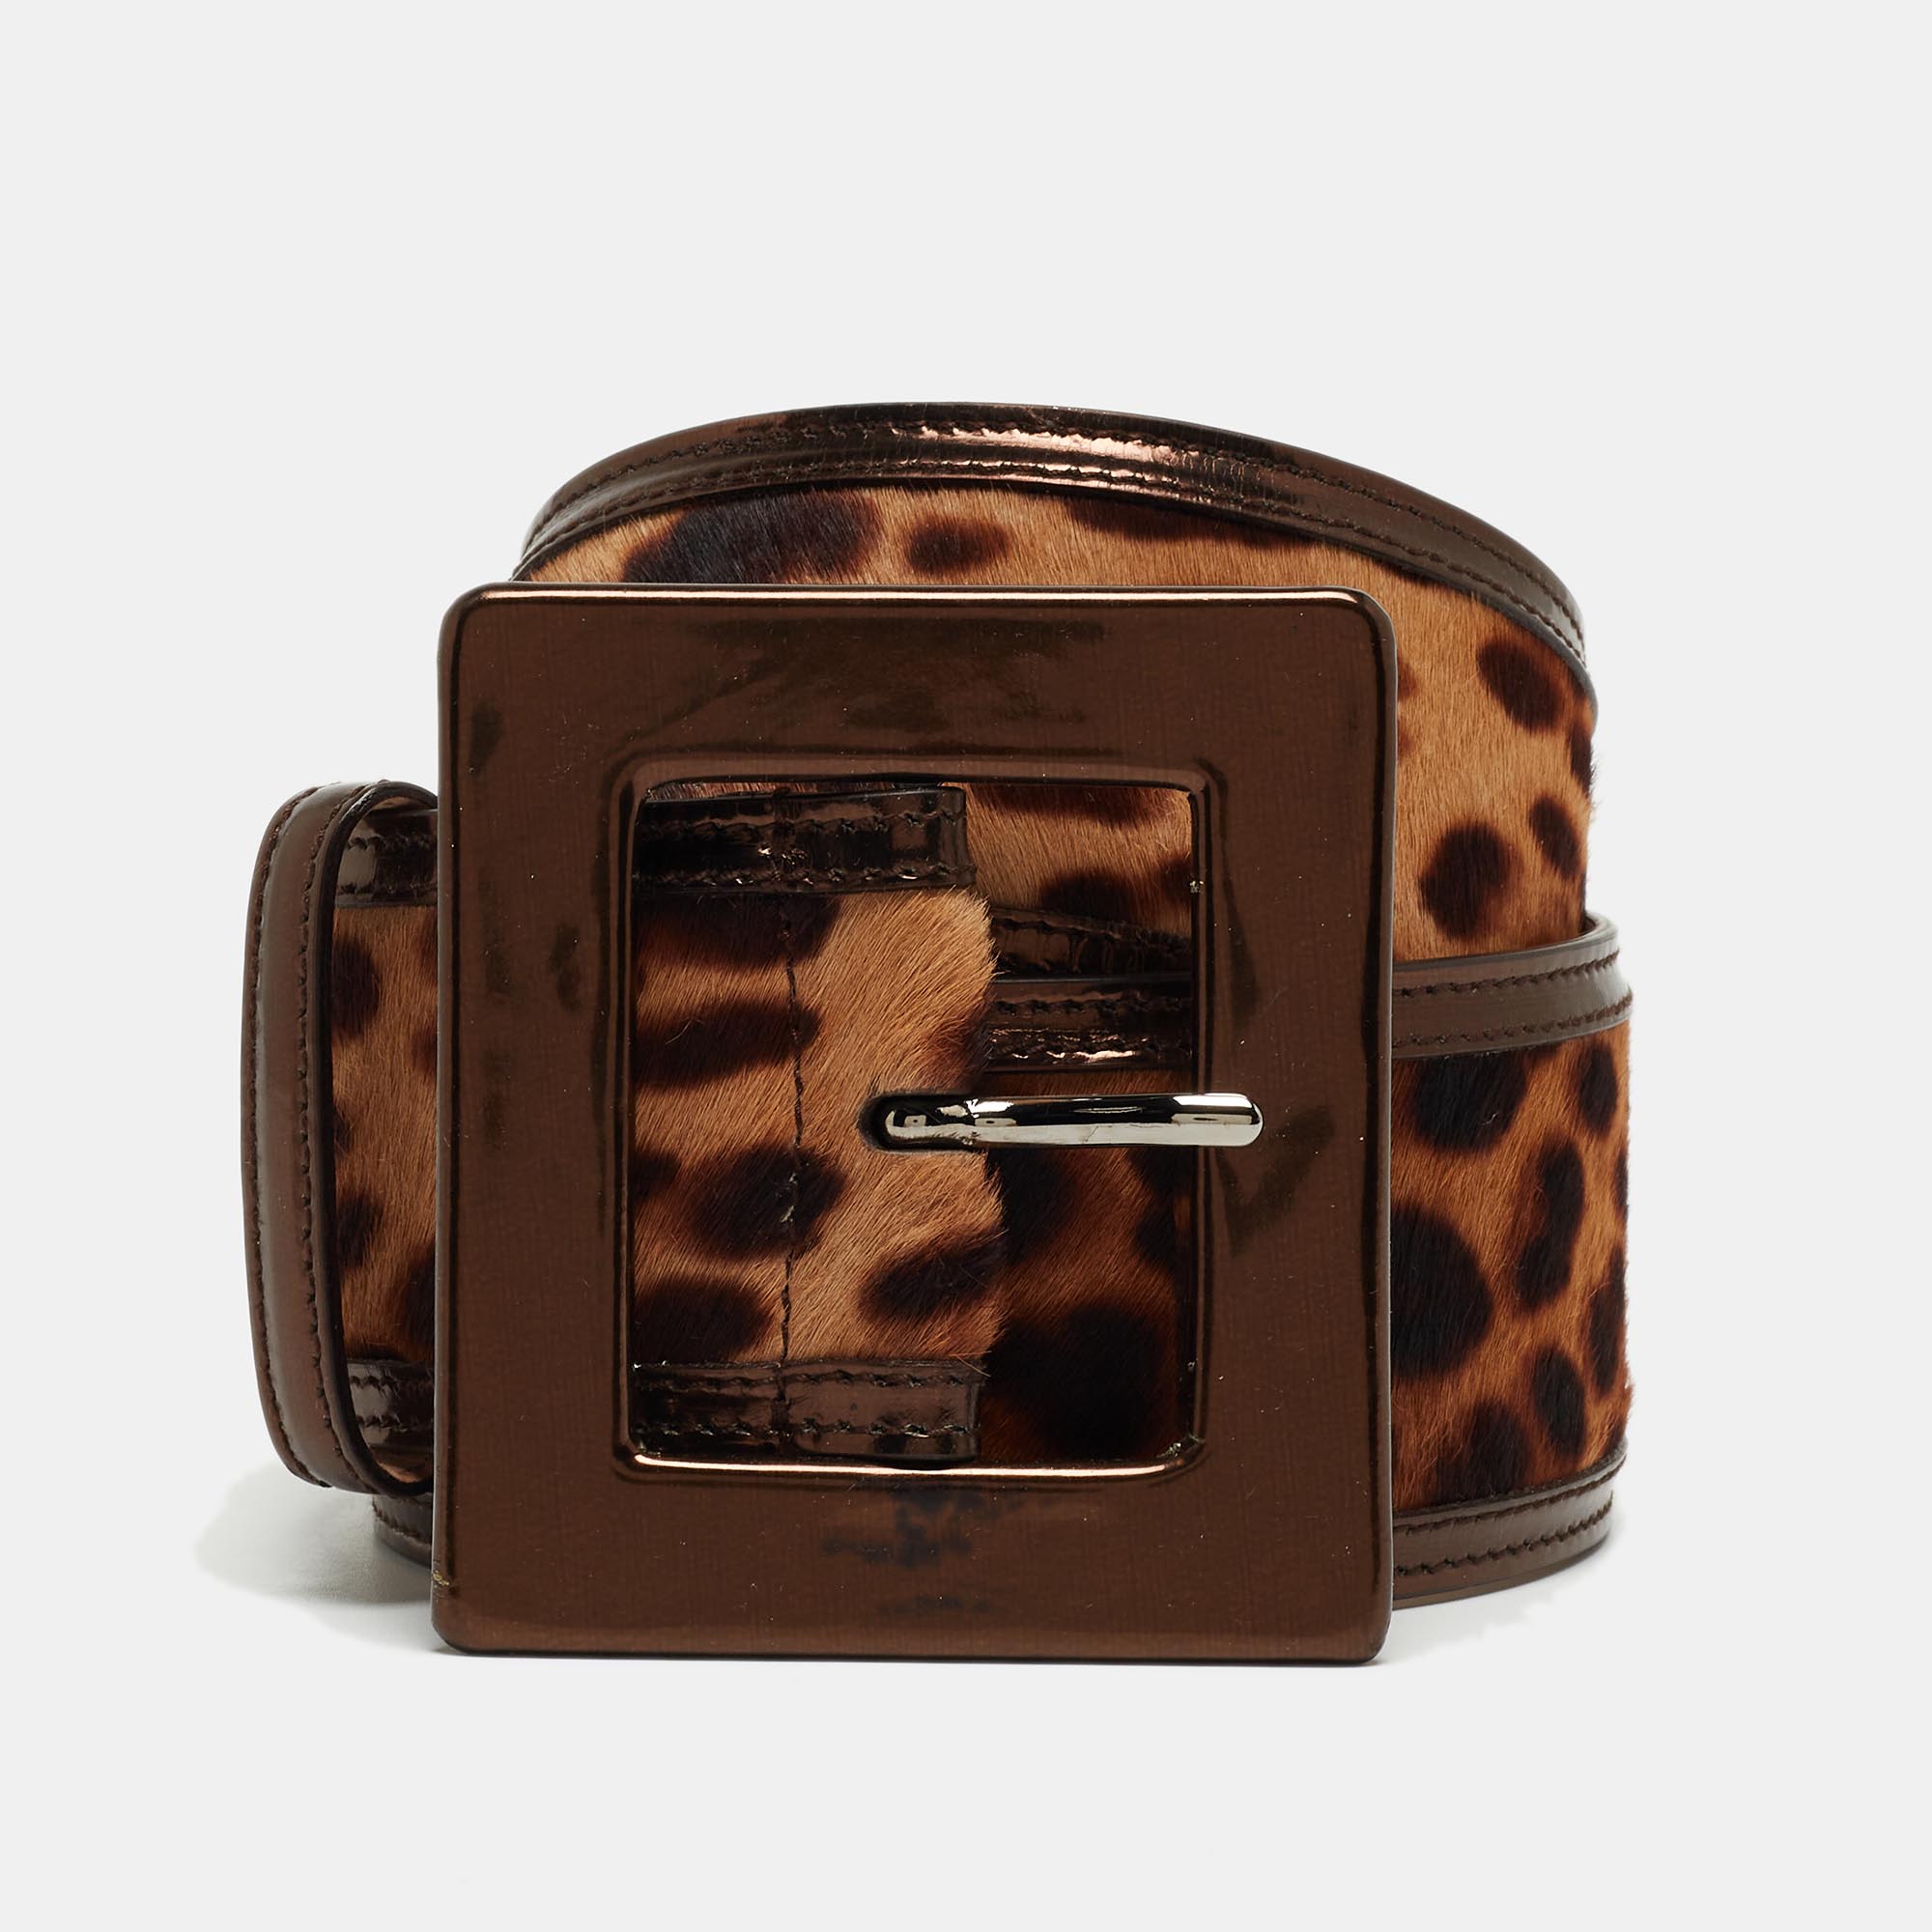 Dolce & gabbana bronze/beige leopard print calf hair and patent leather wide buckle belt 80cm